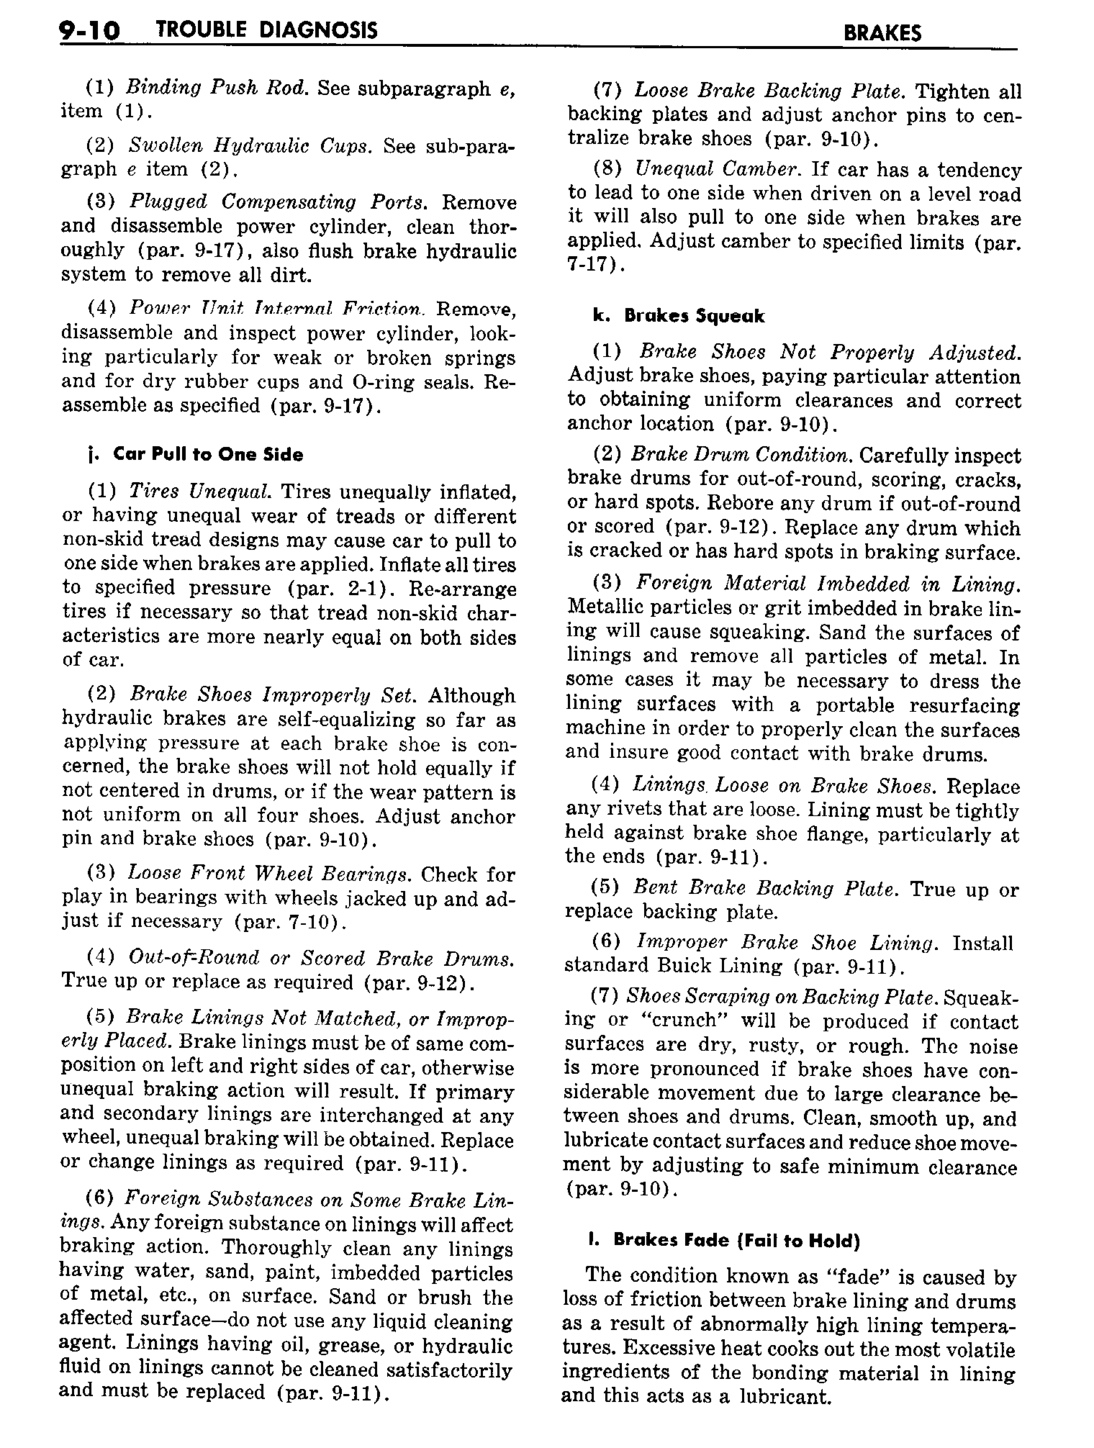 n_10 1960 Buick Shop Manual - Brakes-010-010.jpg